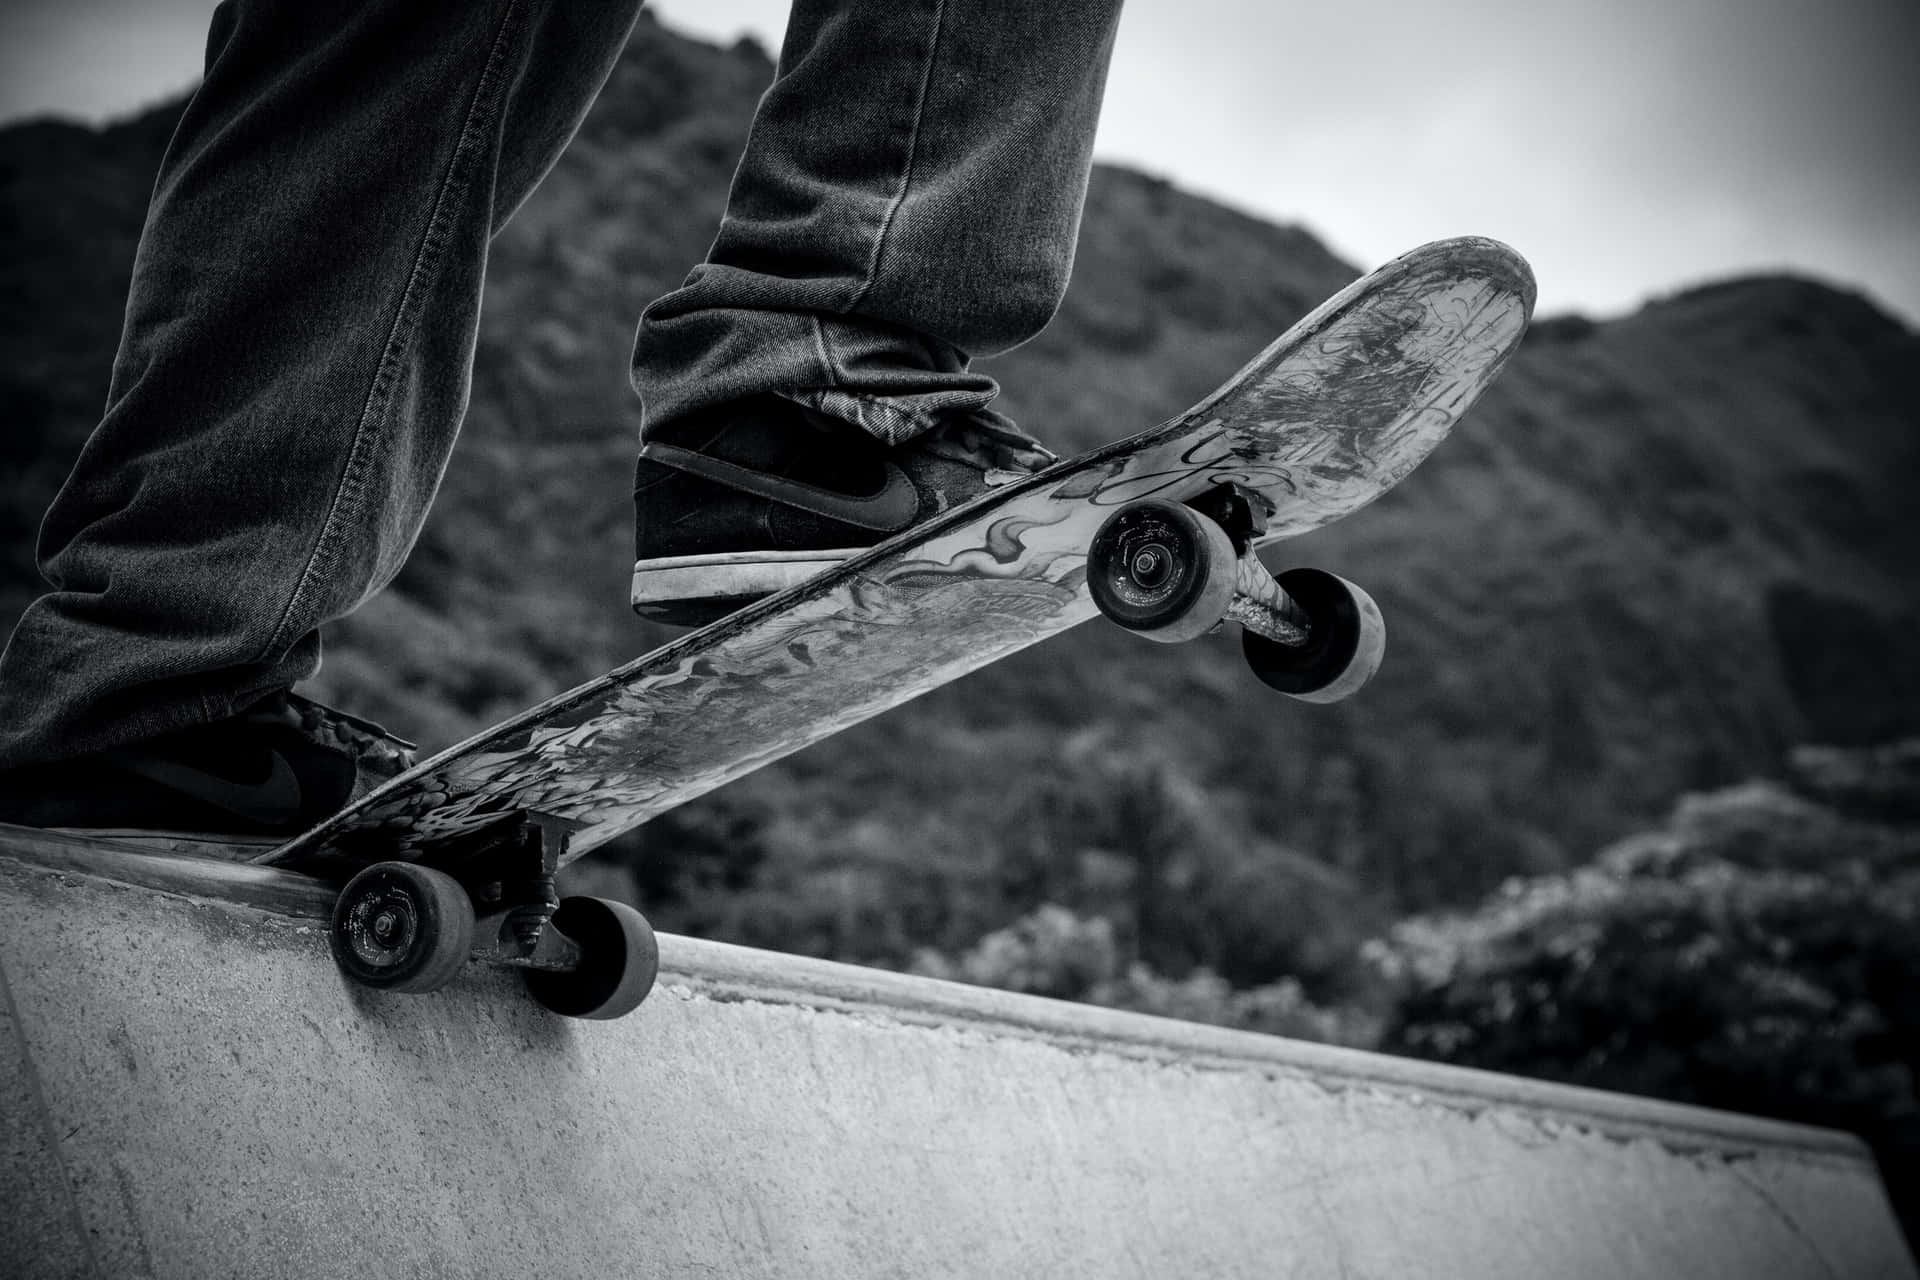 Enjoying the day on a Skateboard